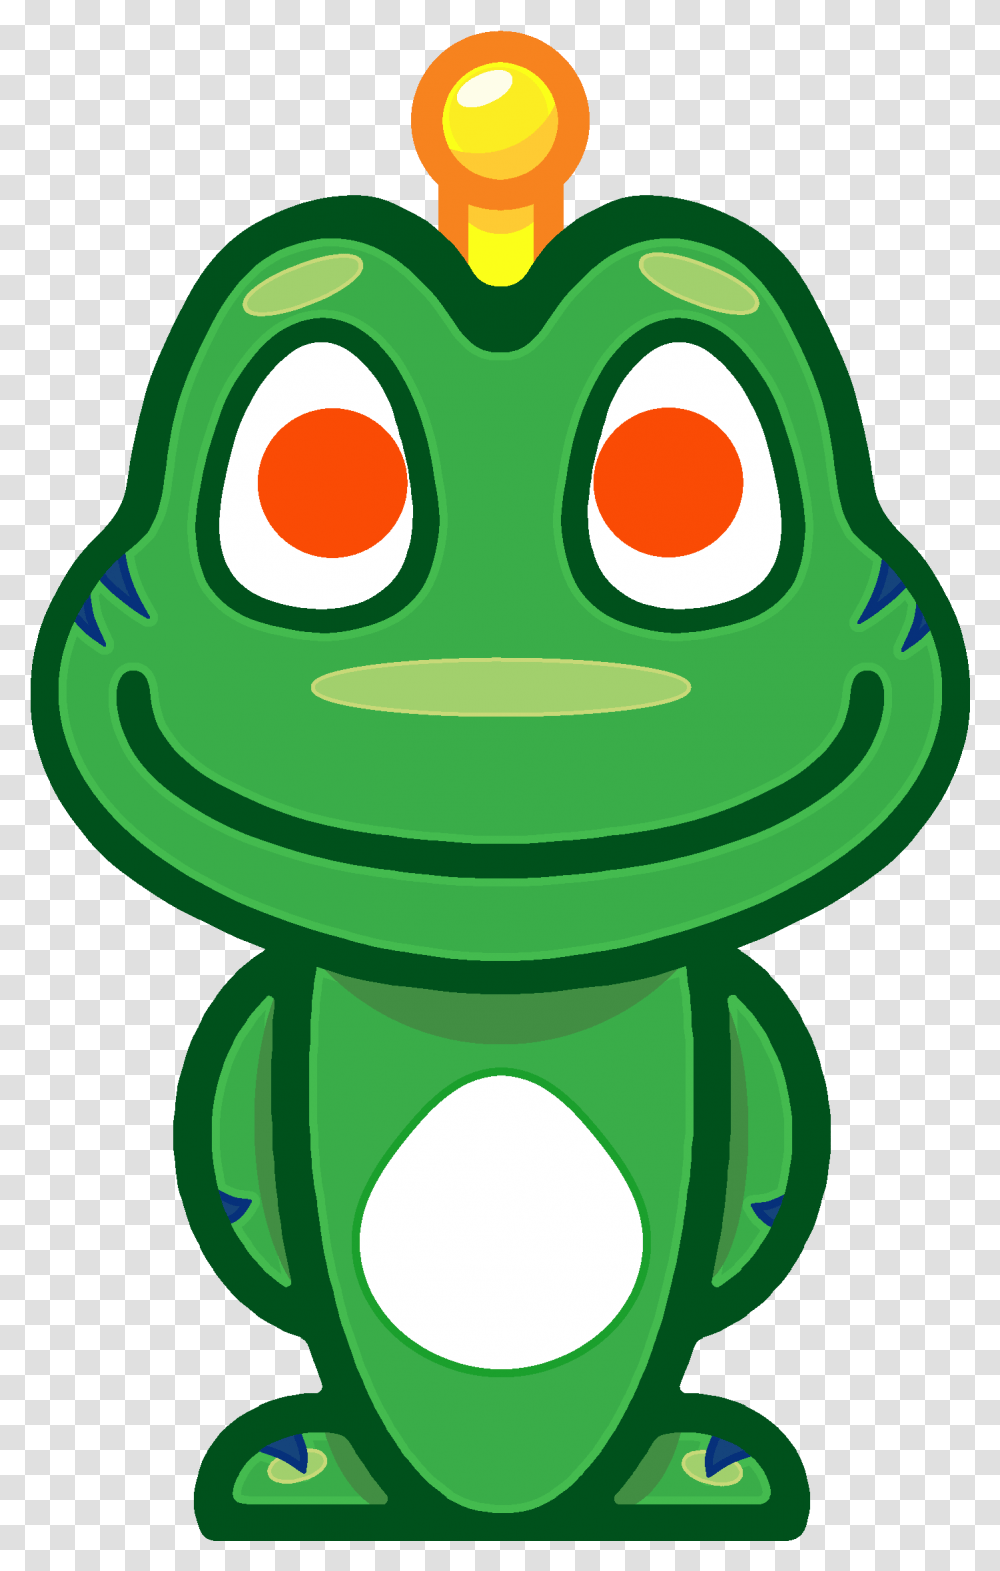 New And Improved Hd Rgeocaching Snoosignal Logo Geocaching Reddit Logo Frog, Green, Birthday Cake, Dessert, Food Transparent Png